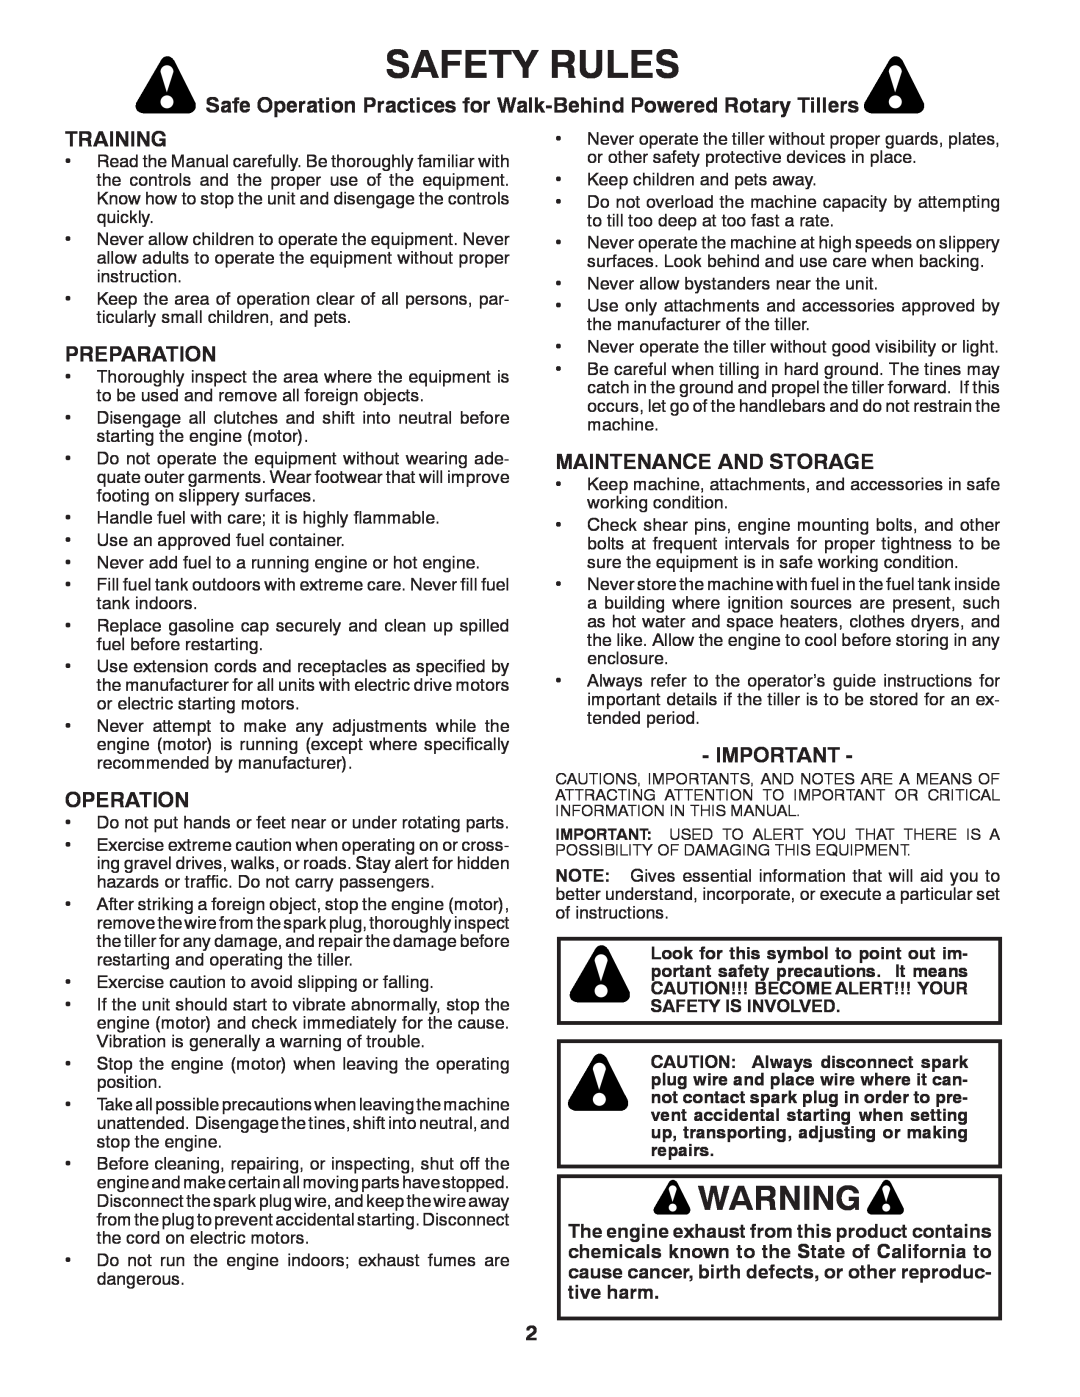 Poulan DRT875 manual Safety Rules, Training, Preparation, Operation, Maintenance And Storage 